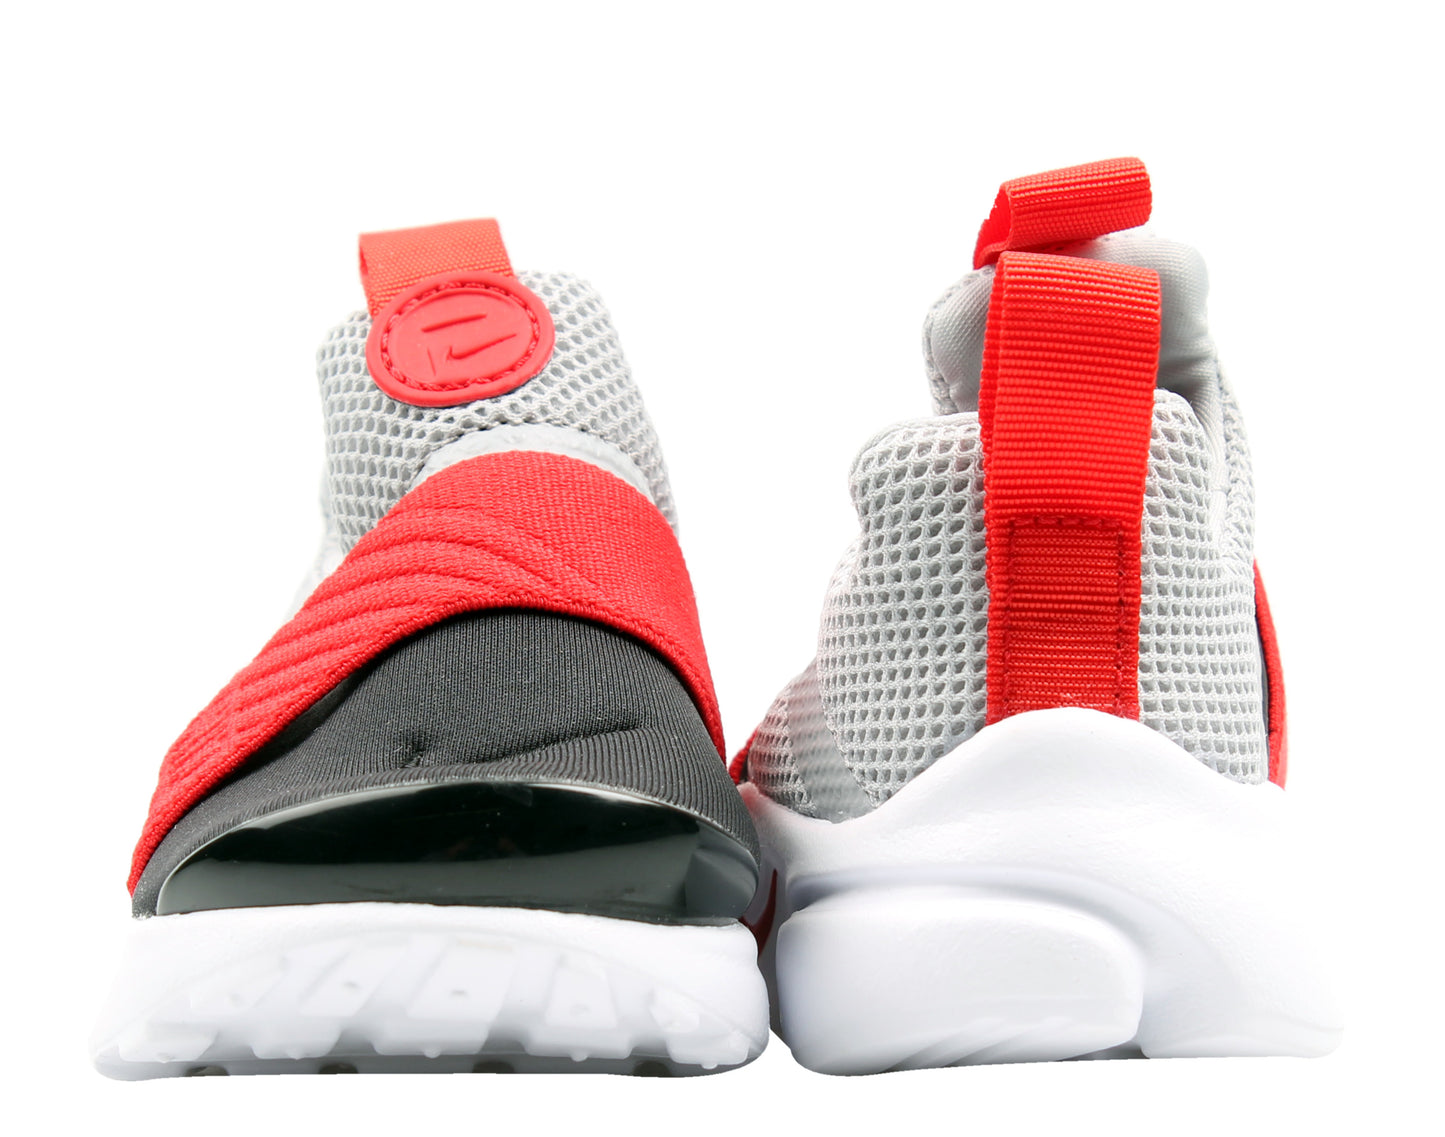 Nike Presto Extreme (TD) Grey/Red-Black Big Little Kids Running Shoes 870019-009